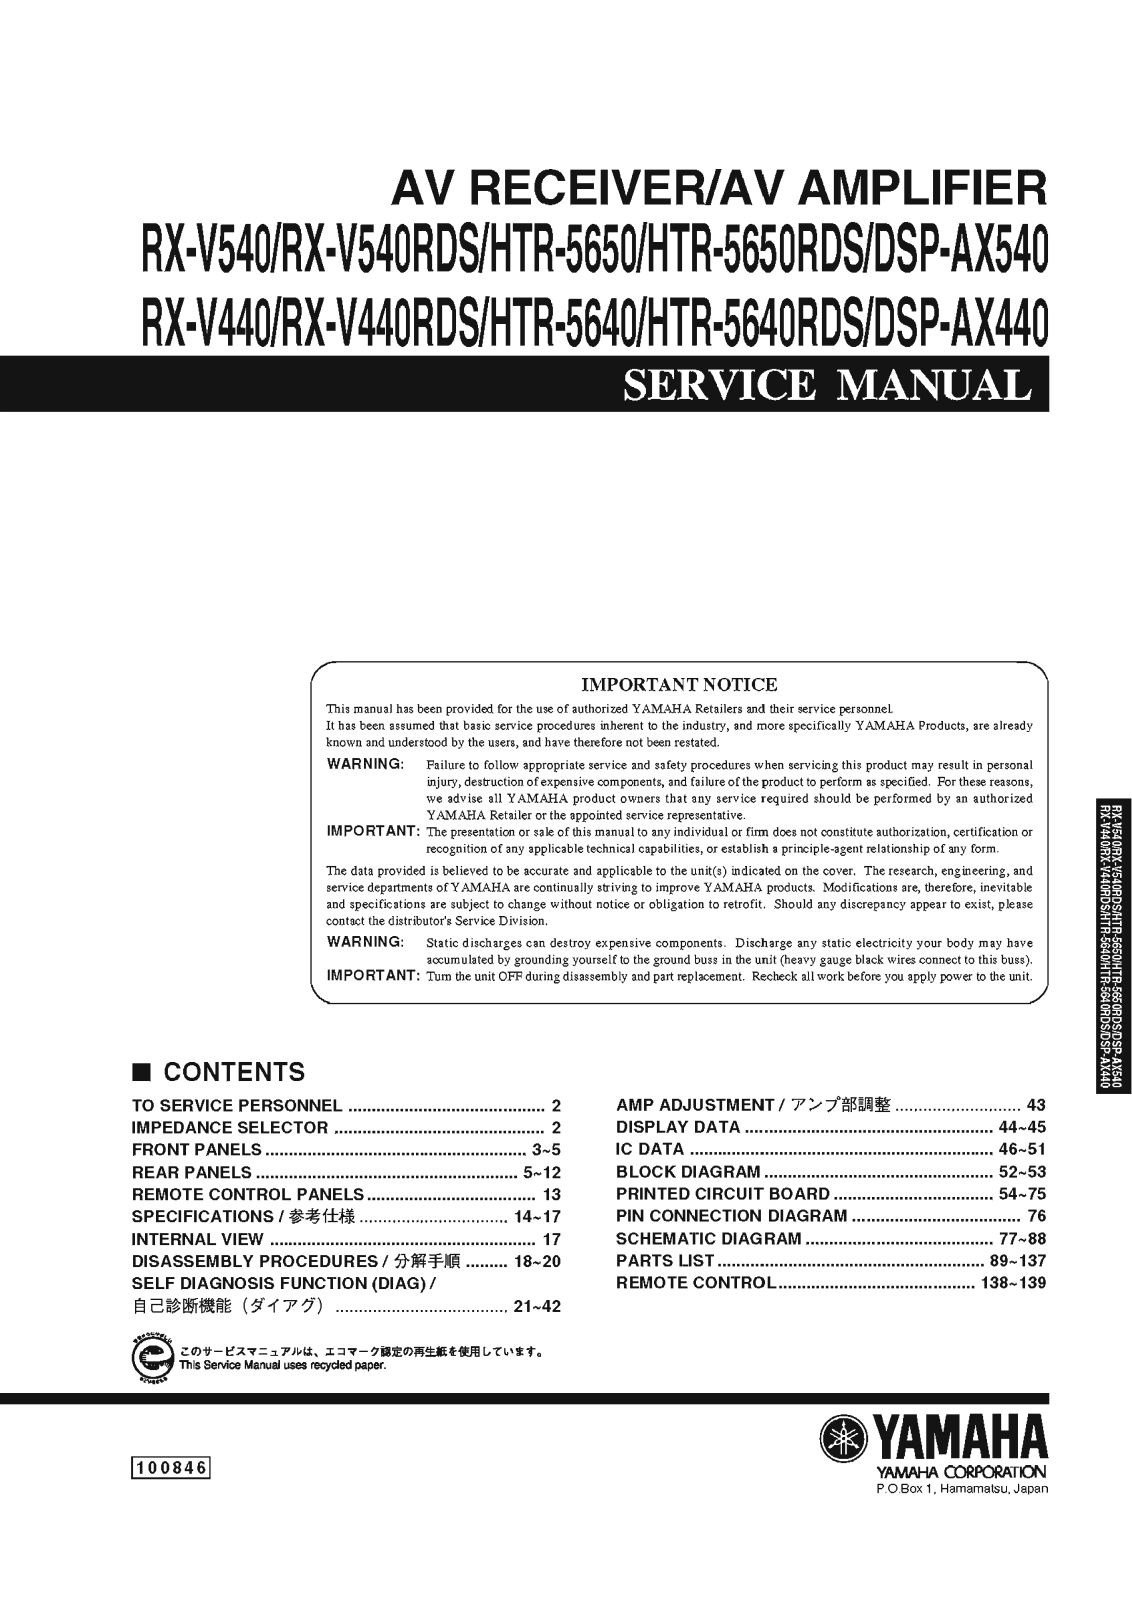 Yamaha HTR-5650 Service Manual